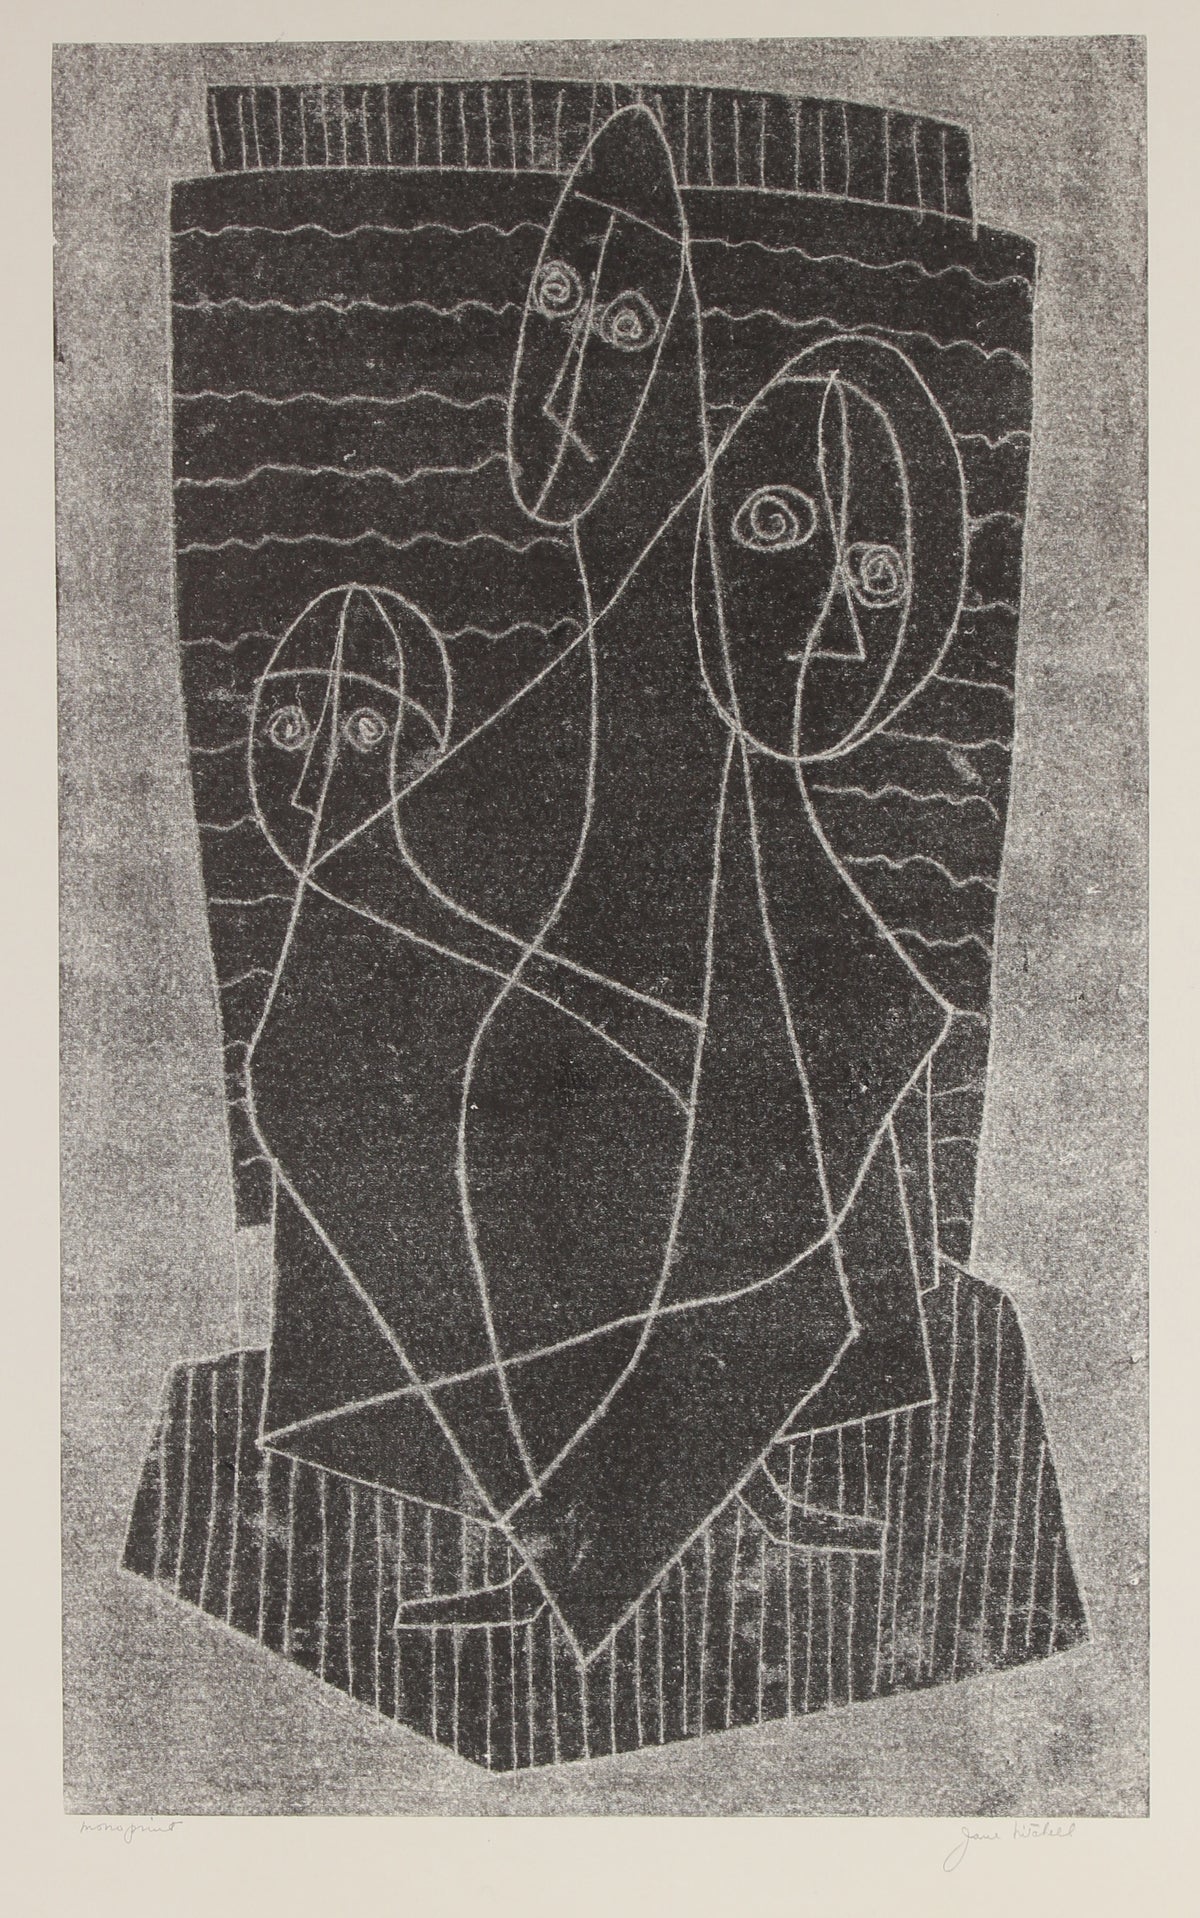 Three Abstracted Figures&lt;br&gt;1970 Monotype&lt;br&gt;&lt;br&gt;#91510